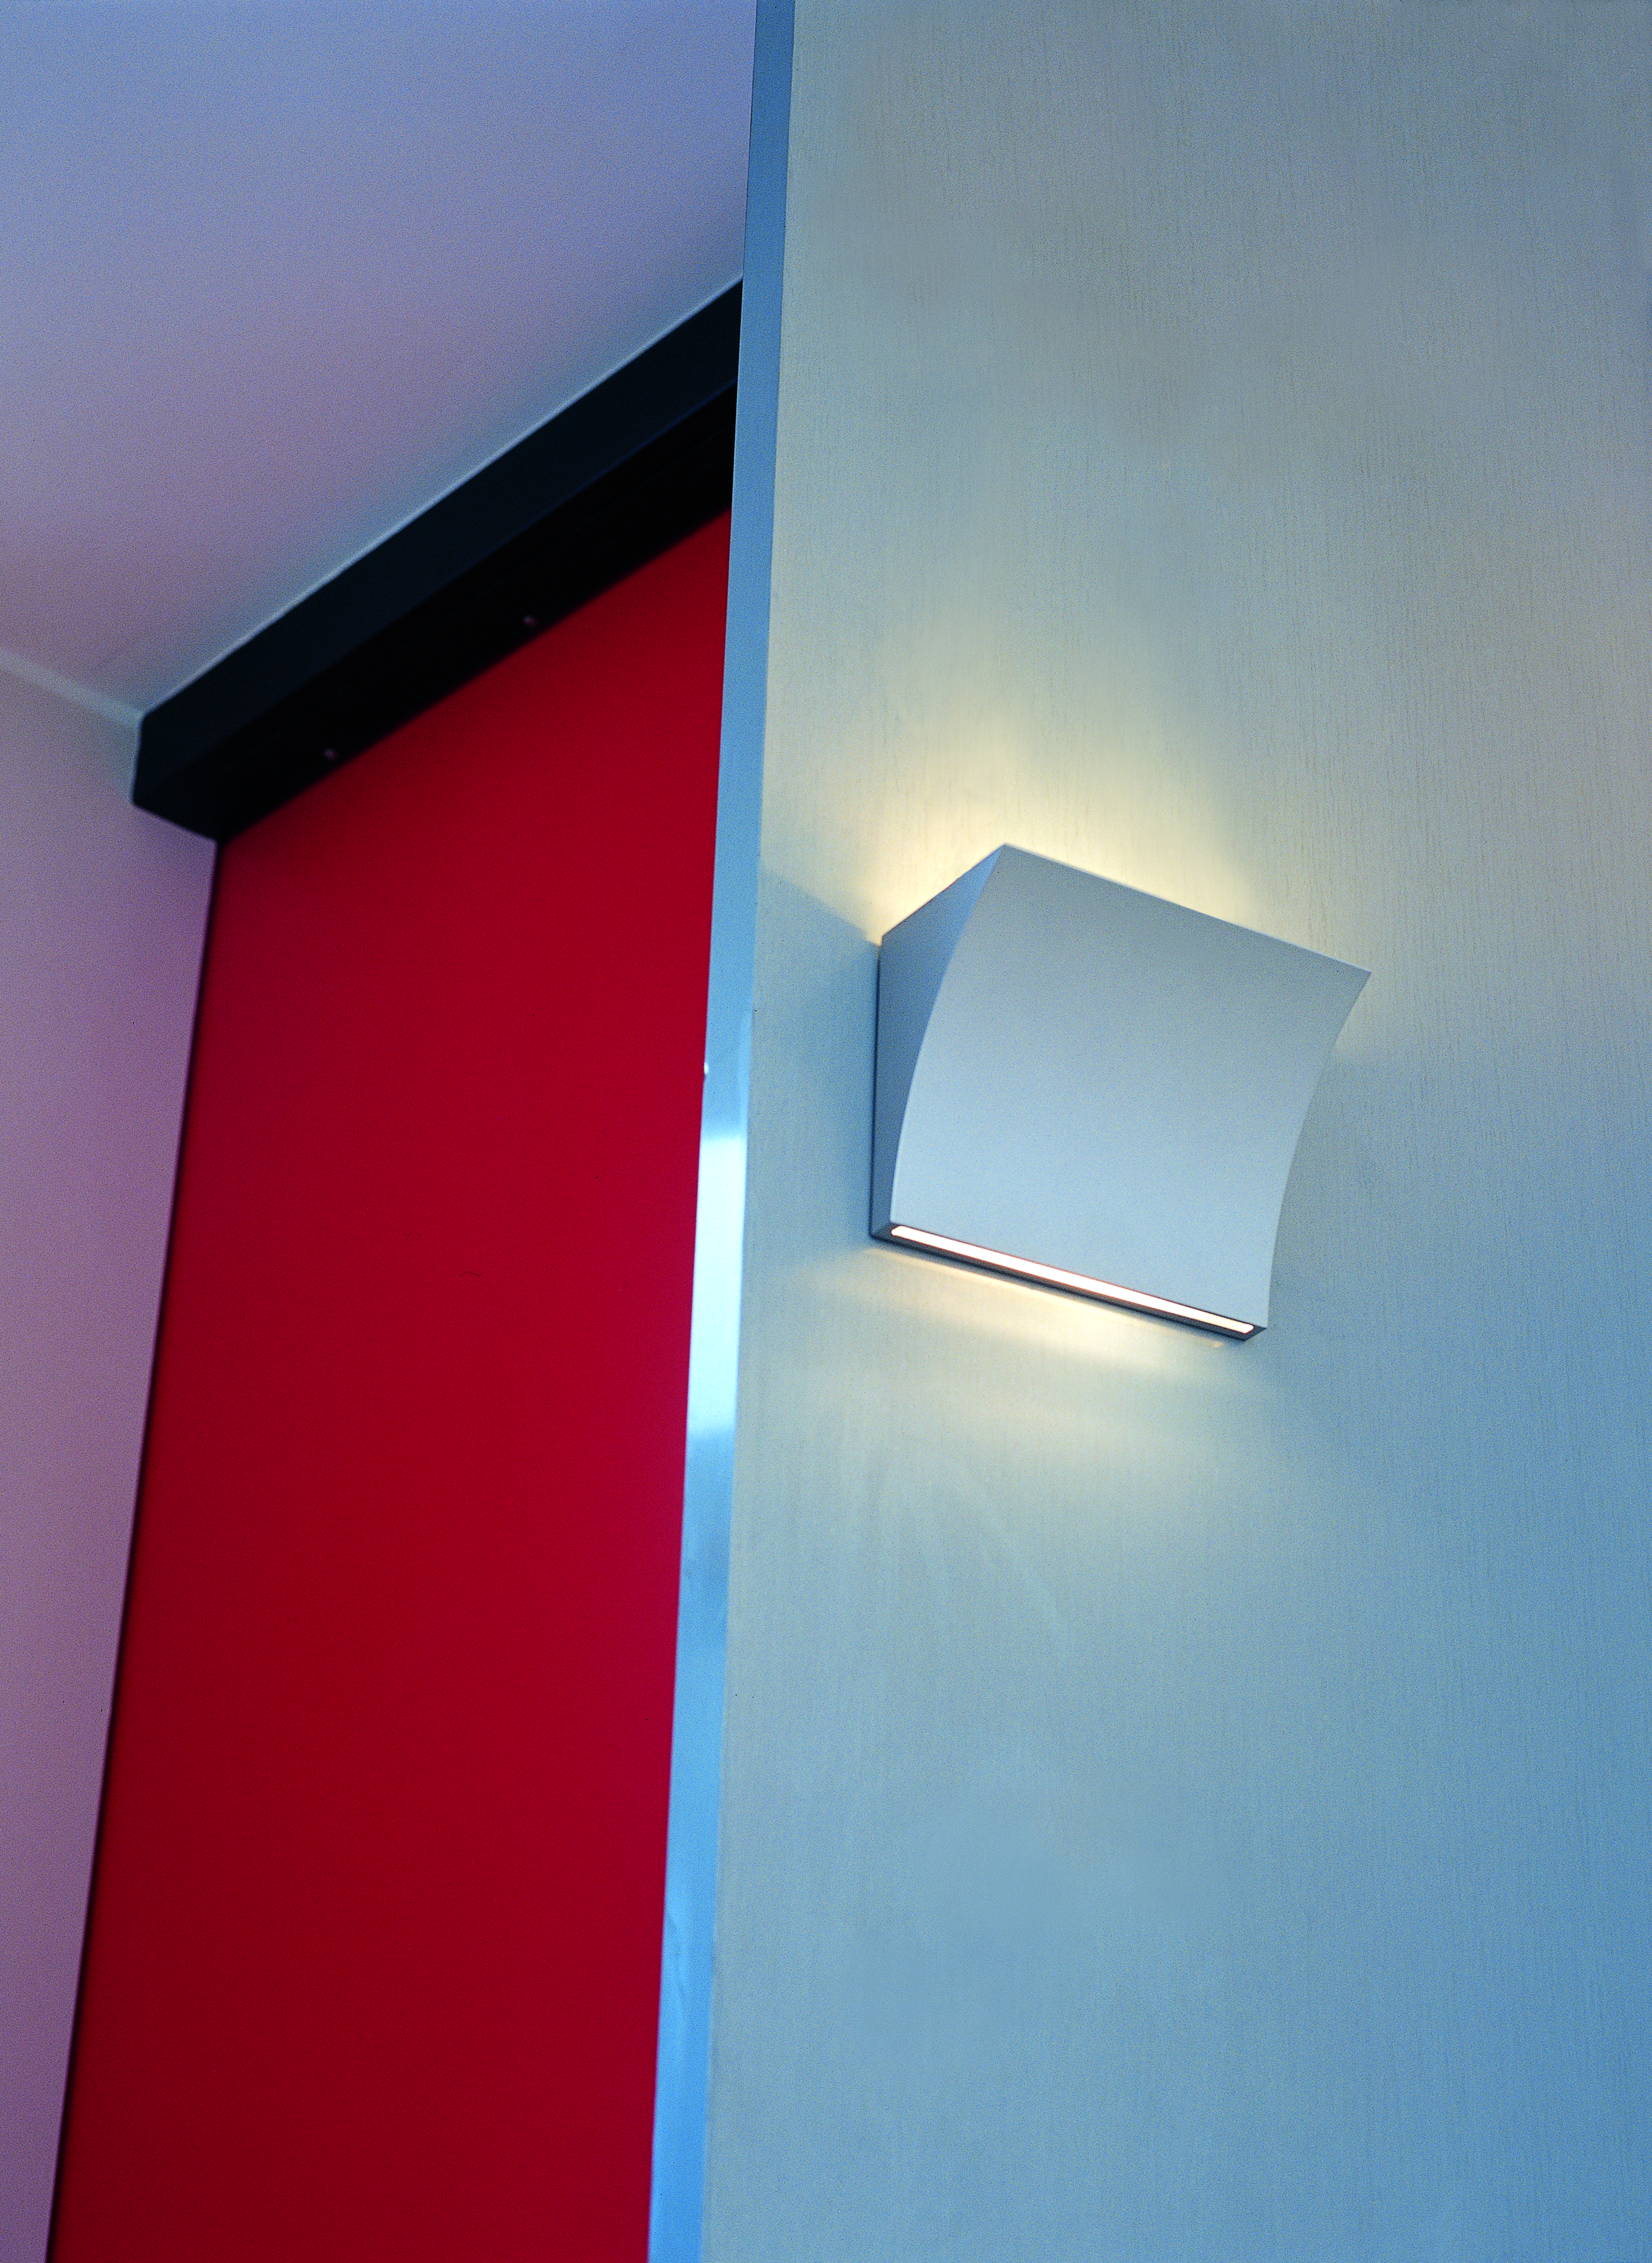 Pochette Up  Down LED provides upward and downward lighting